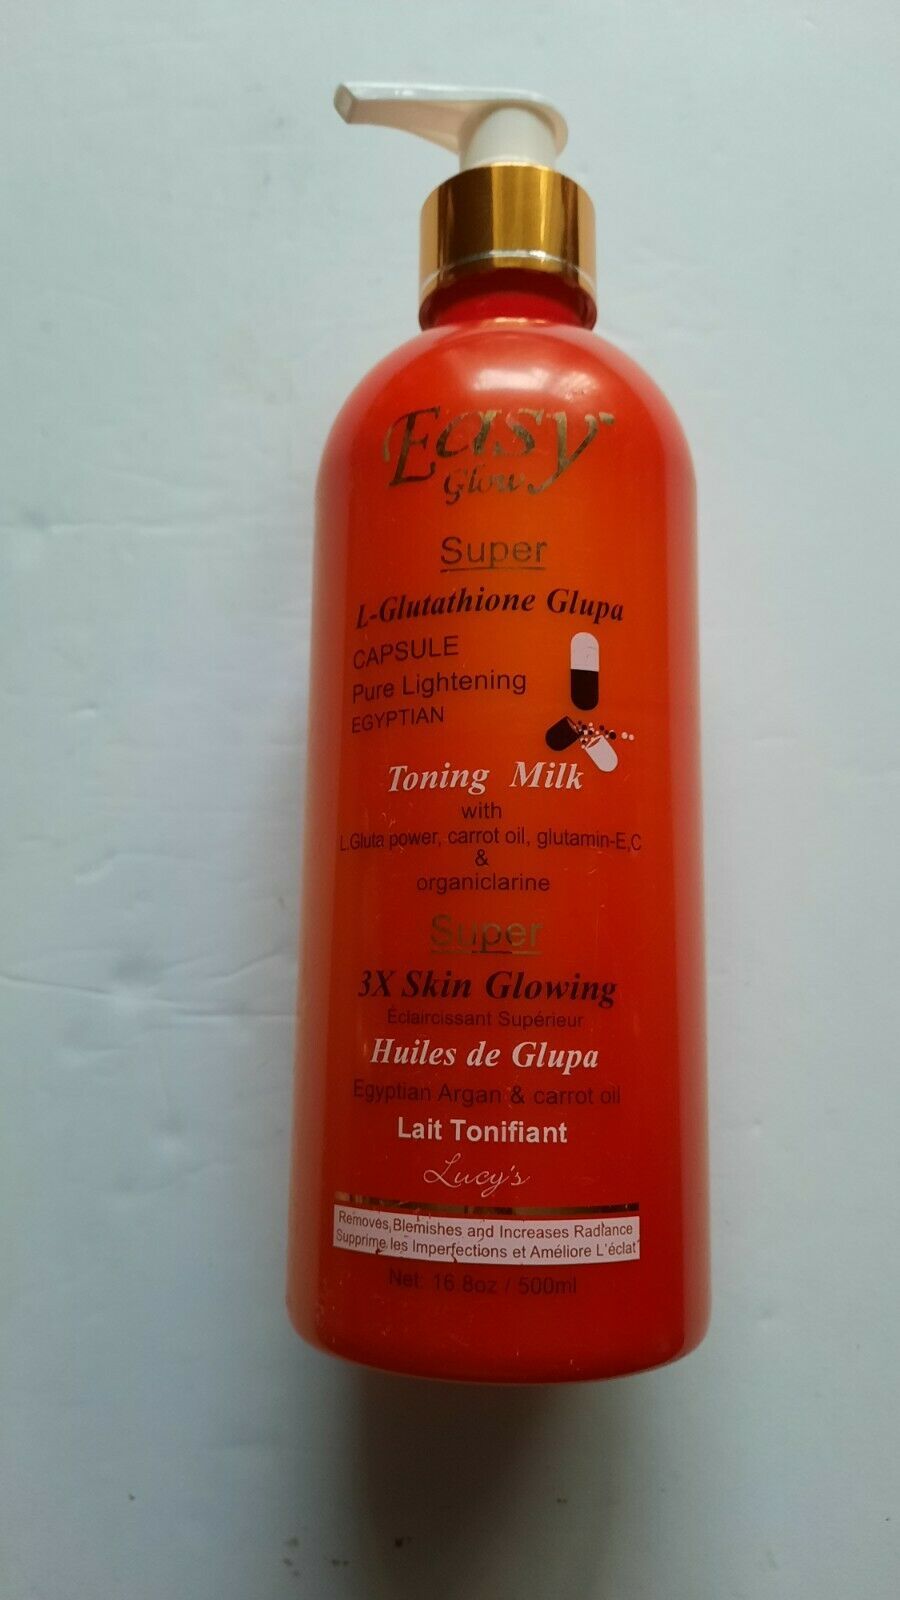 500ml Easy Glow Super L Glutathione Whitening Carrot toning milk 3x skin glowing - $50.00